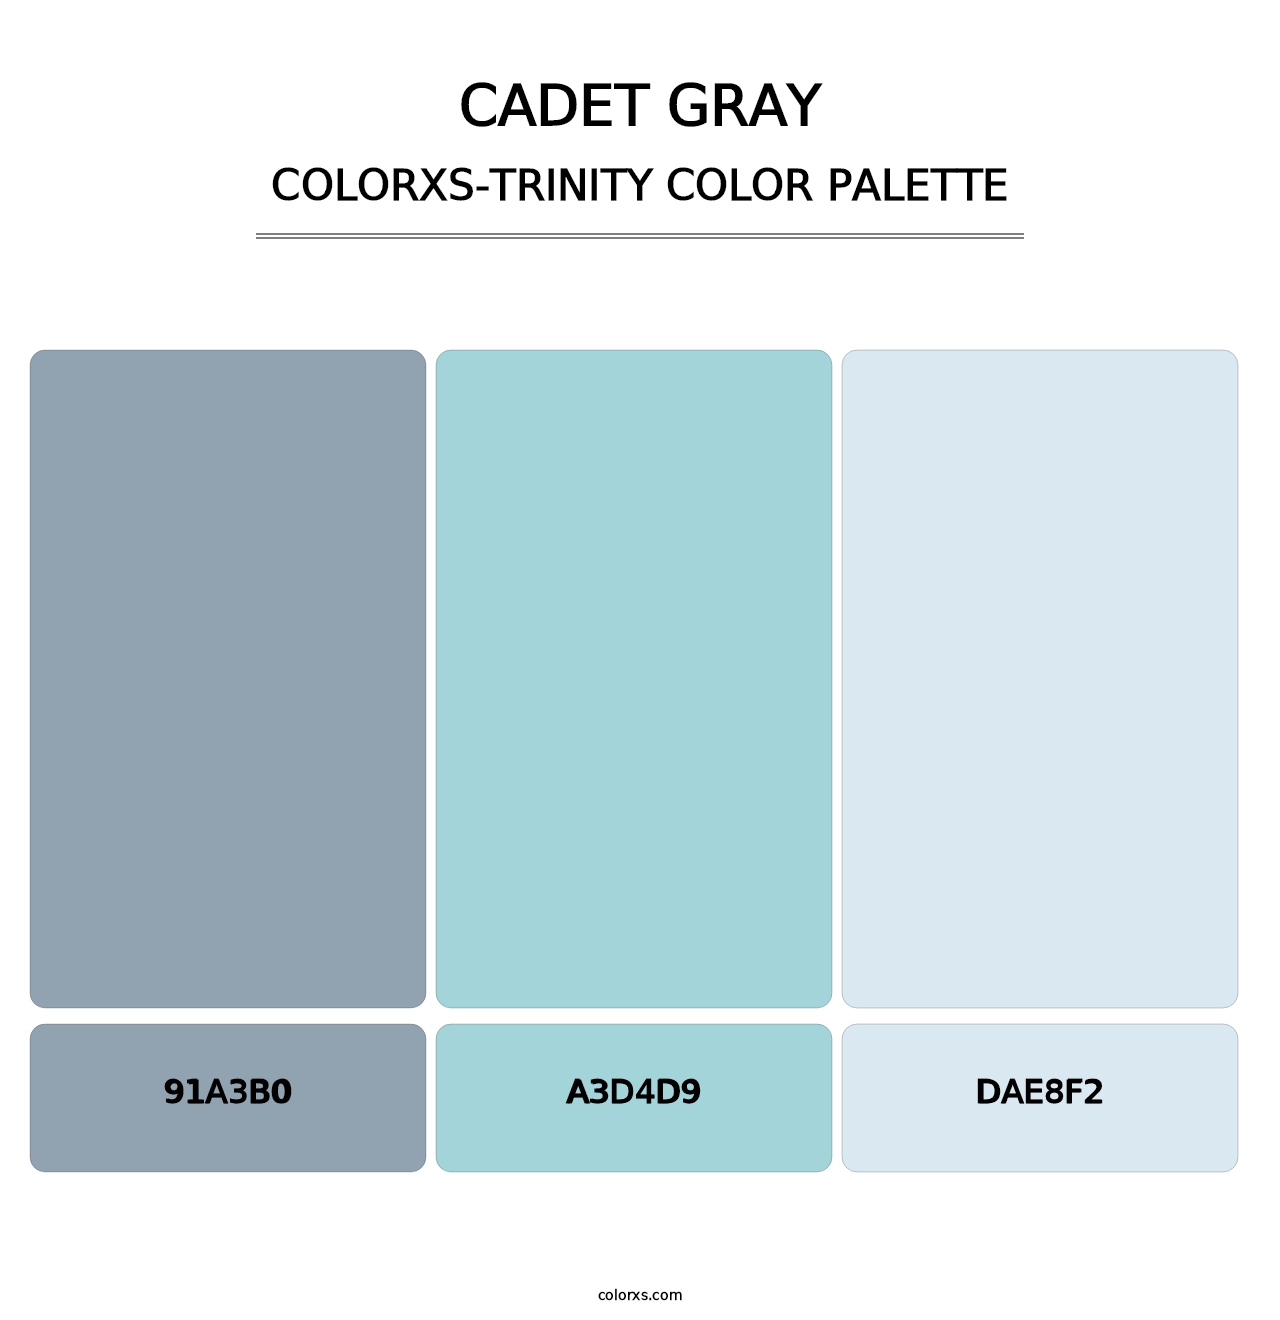 Cadet Gray - Colorxs Trinity Palette